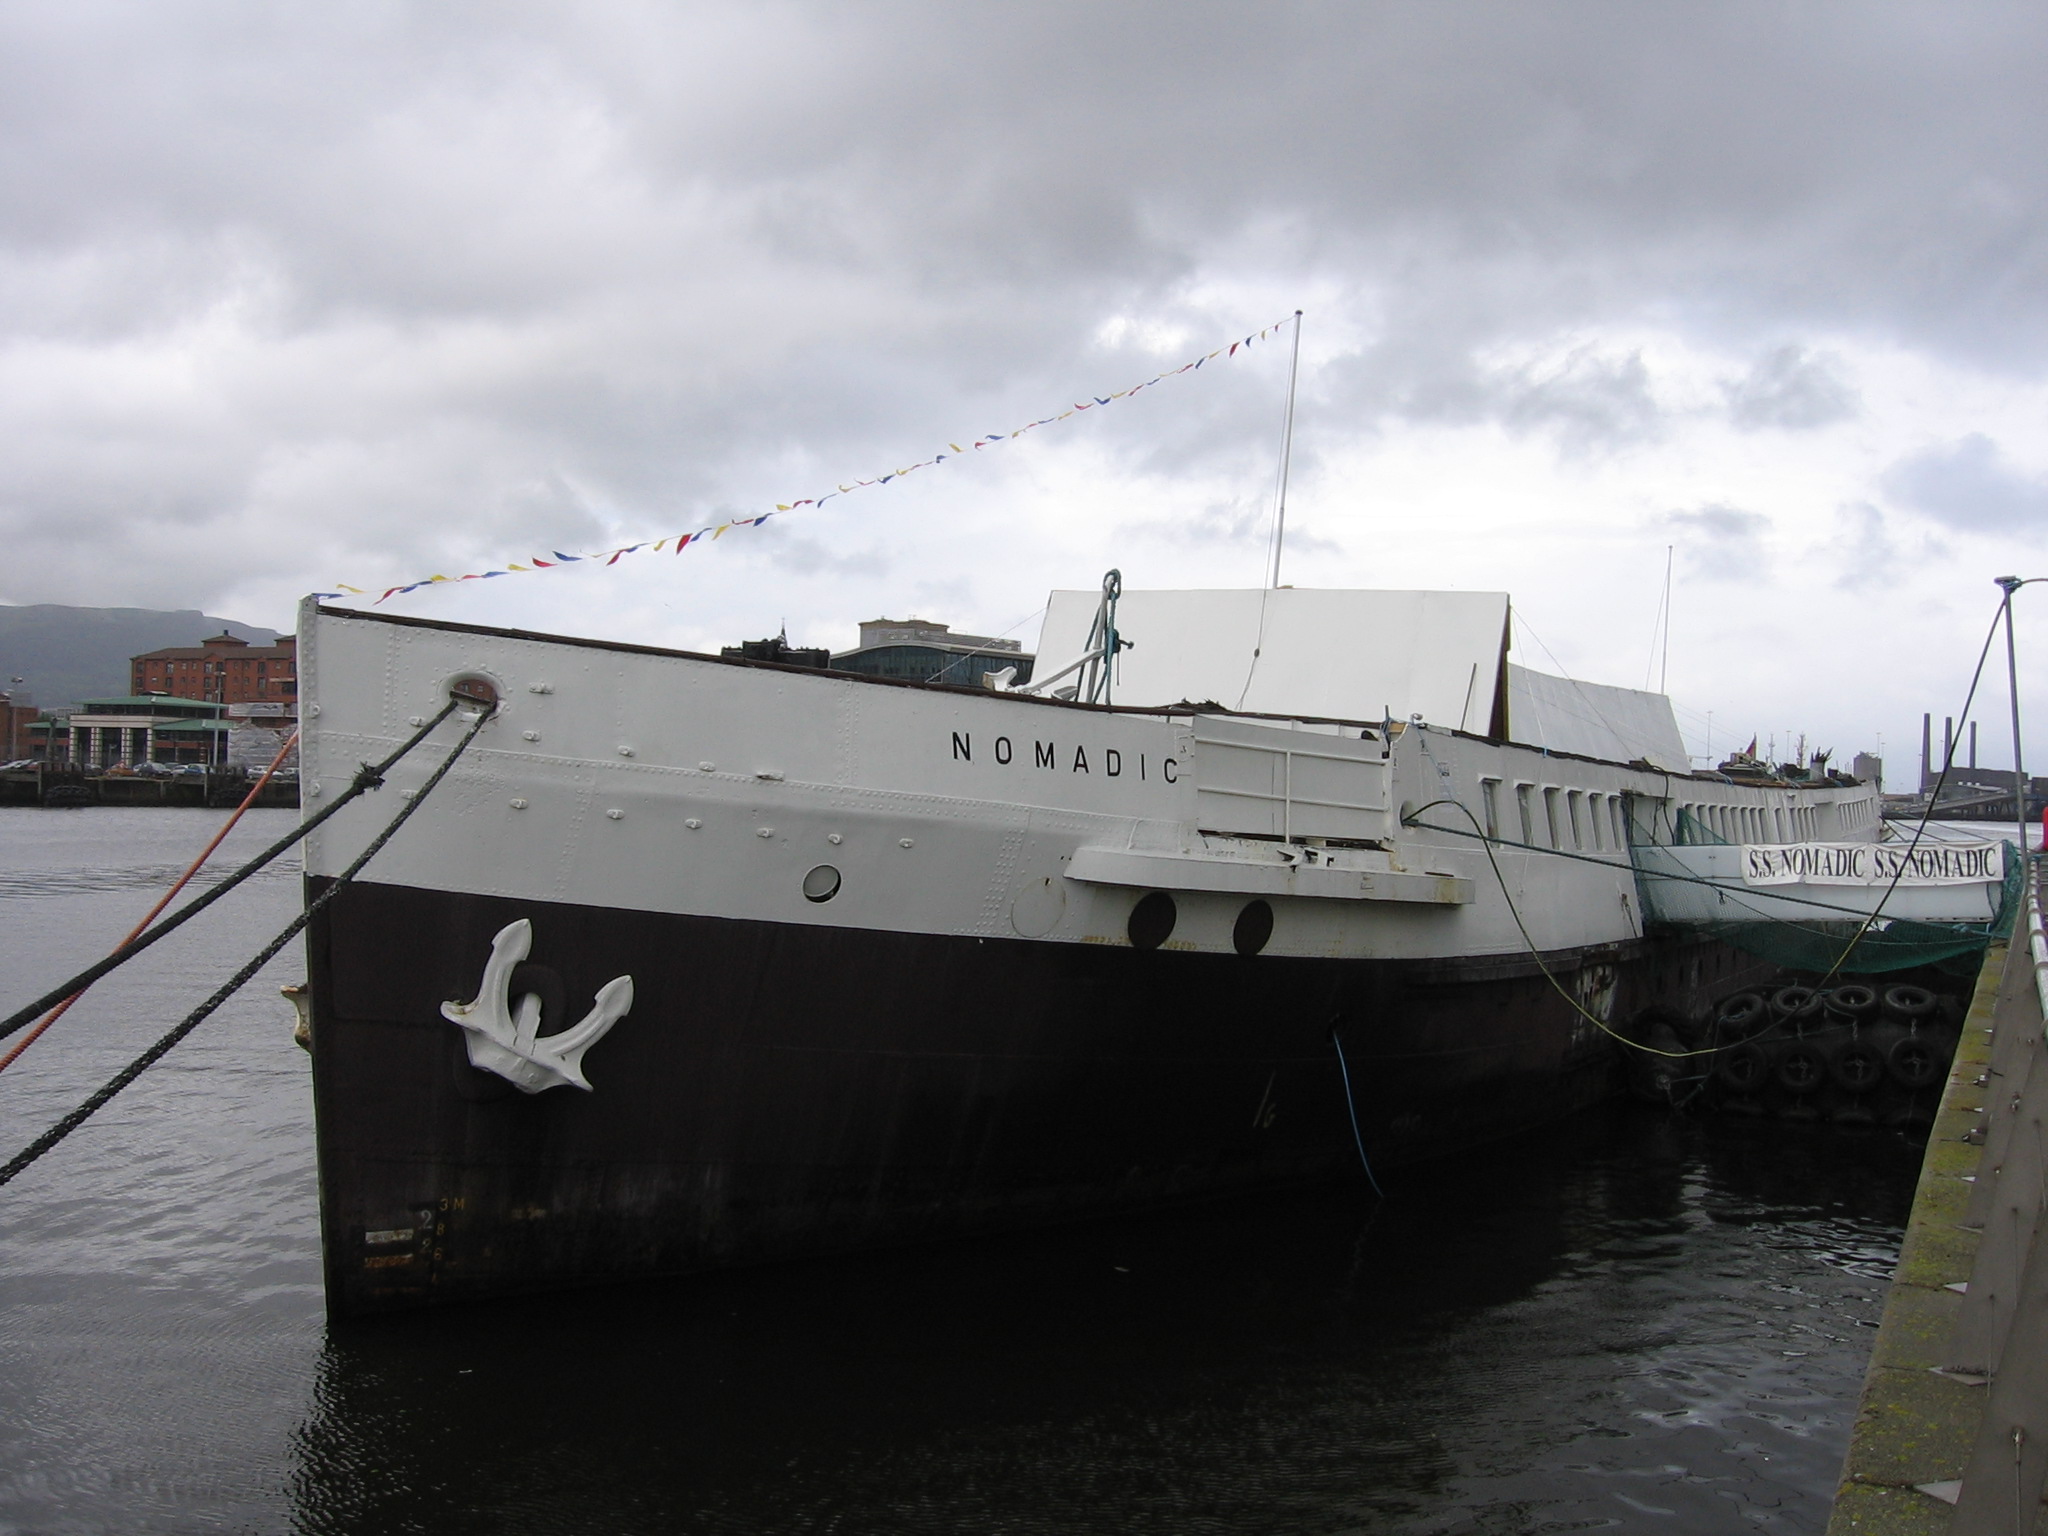 Name SS Nomadic National Historic Ships